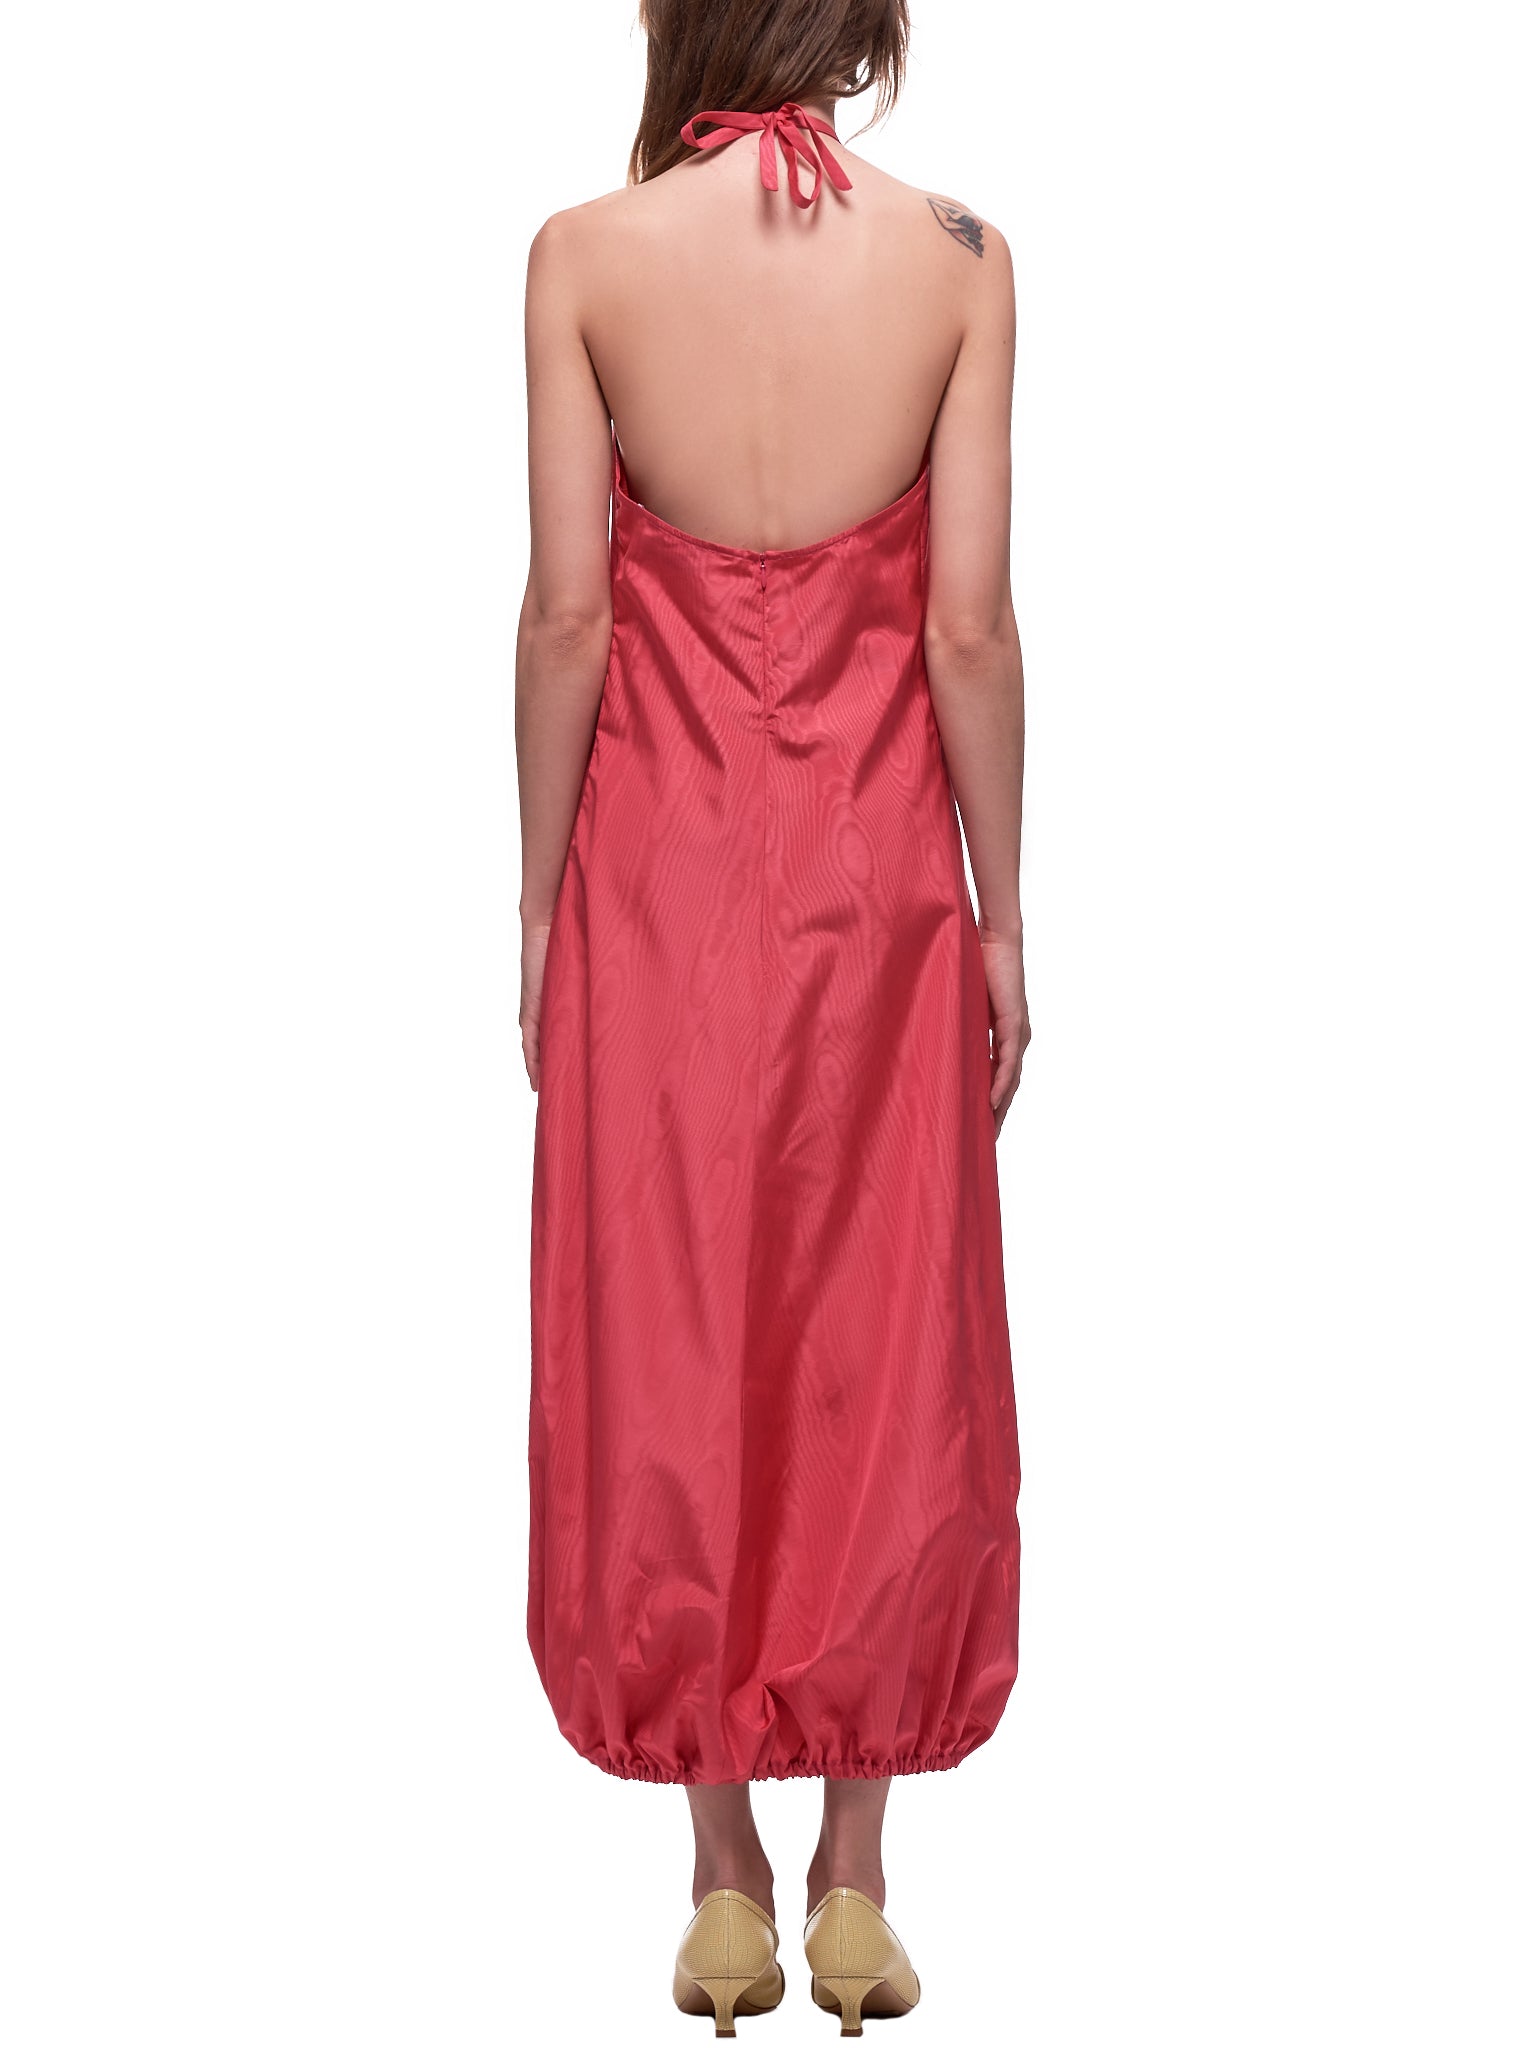 Moire Dress (RR086-DARK-PINK)